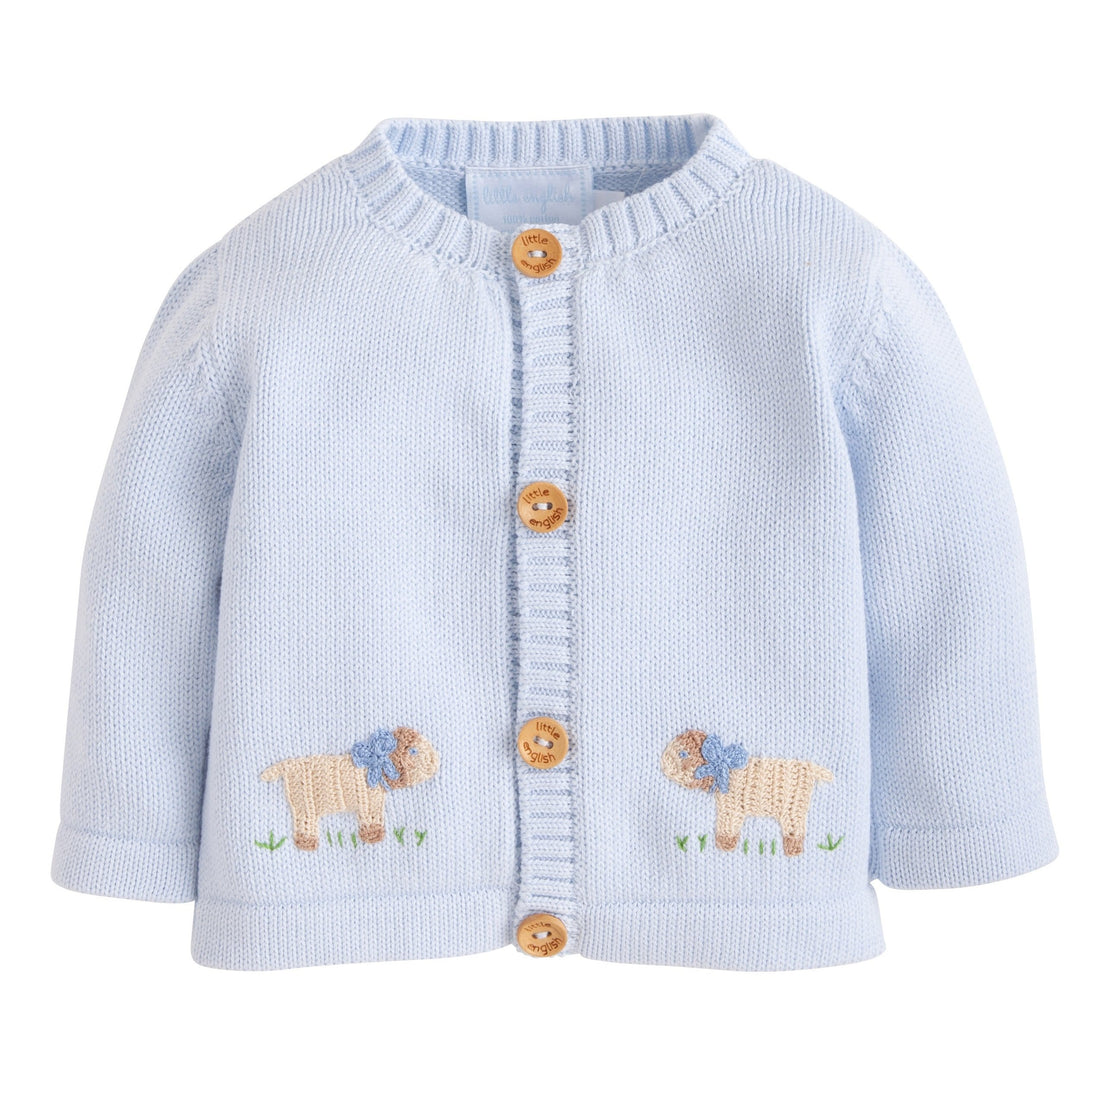 Little English signature year round crochet sweater for baby boy, pima cotton sheep crochet sweater, traditional children&